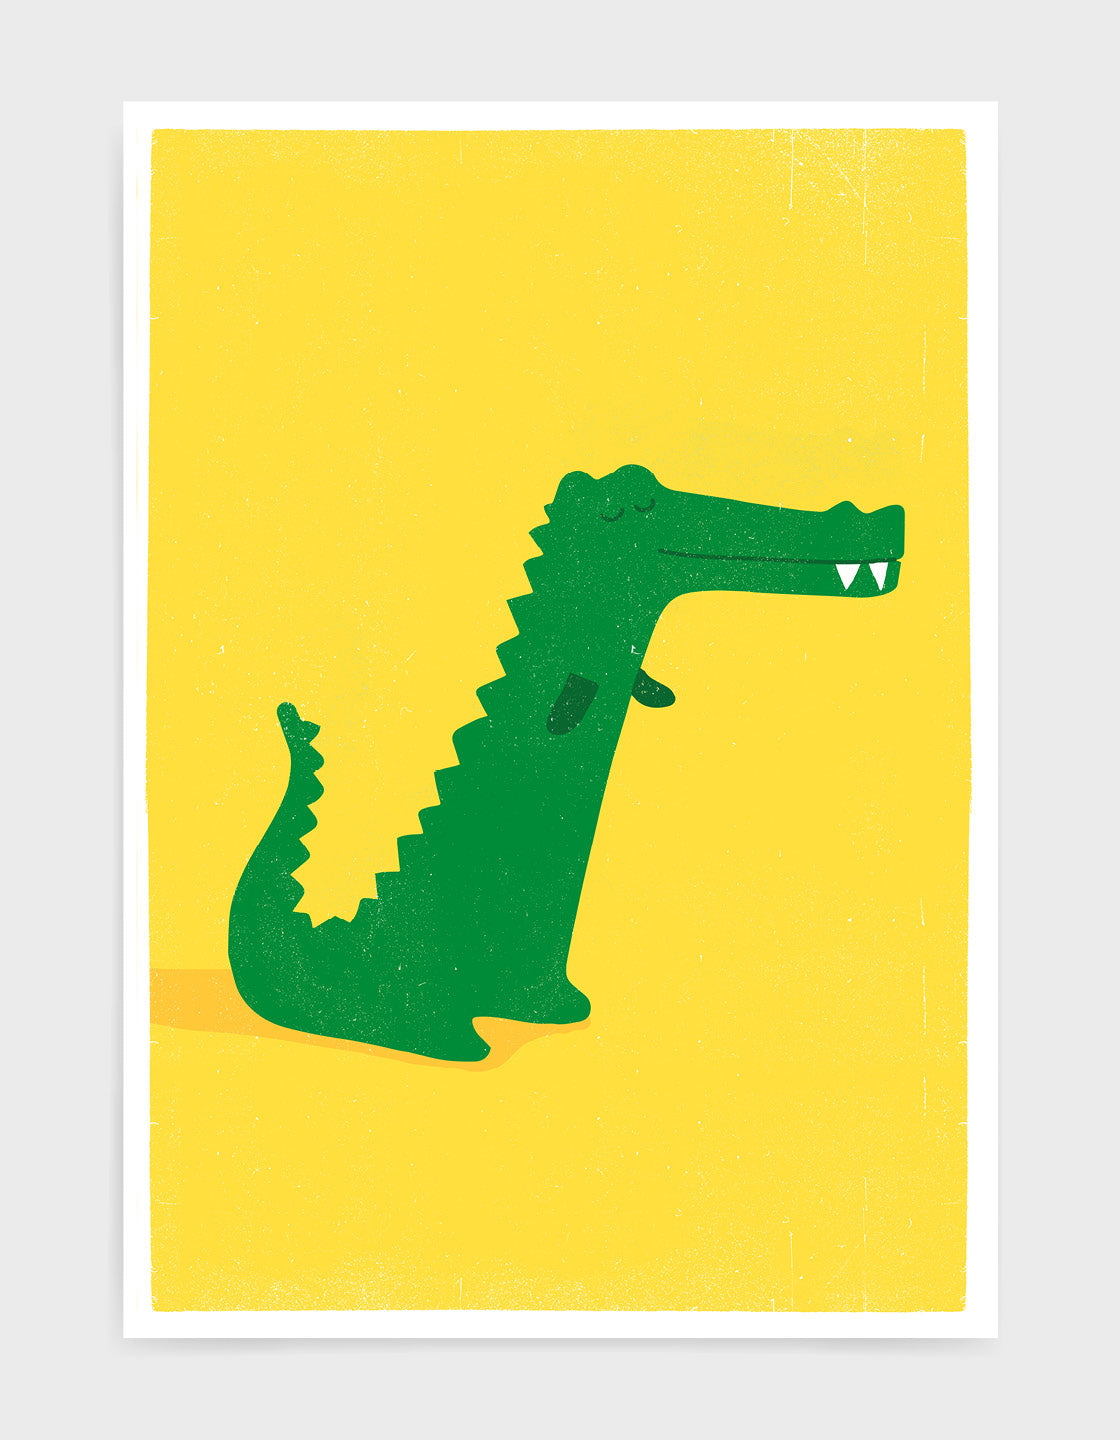 kids cute crocodile illustration art print on a yellow background